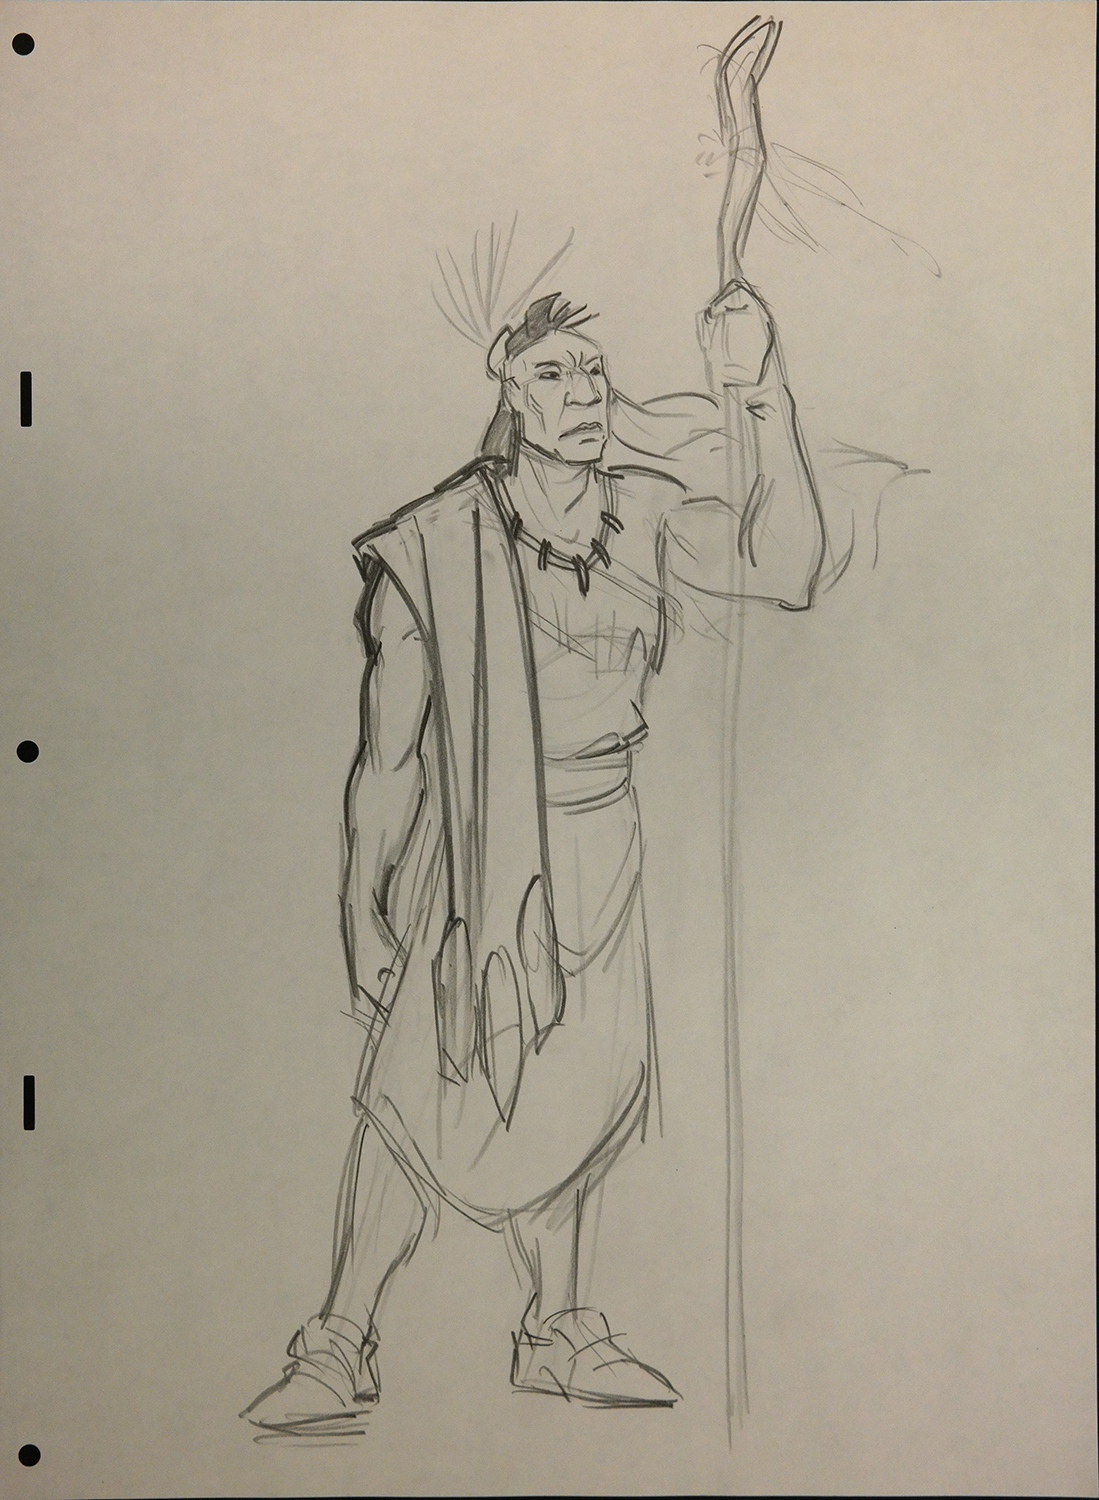 Pocahontas Production Drawing - ID: maypocahontas6868 | Van Eaton Galleries